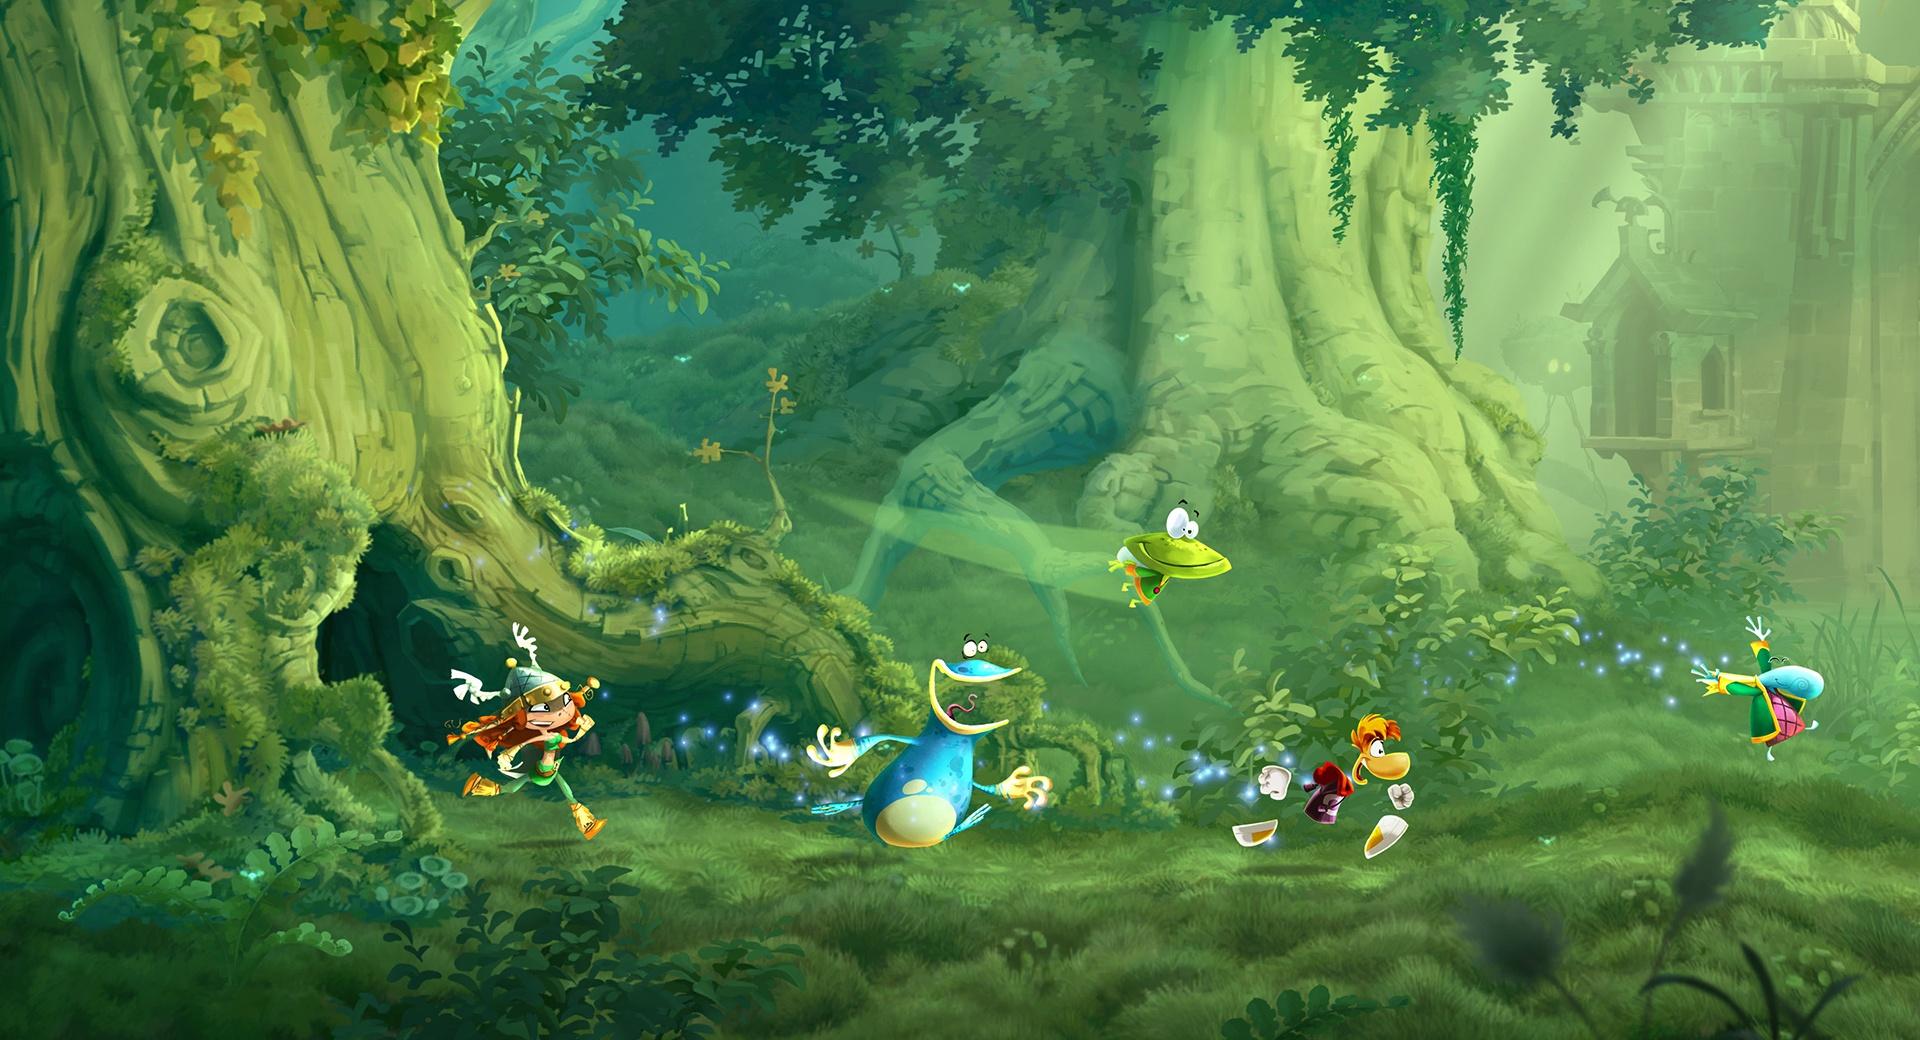 Rayman Legends Screenshots at 1024 x 1024 iPad size wallpapers HD quality